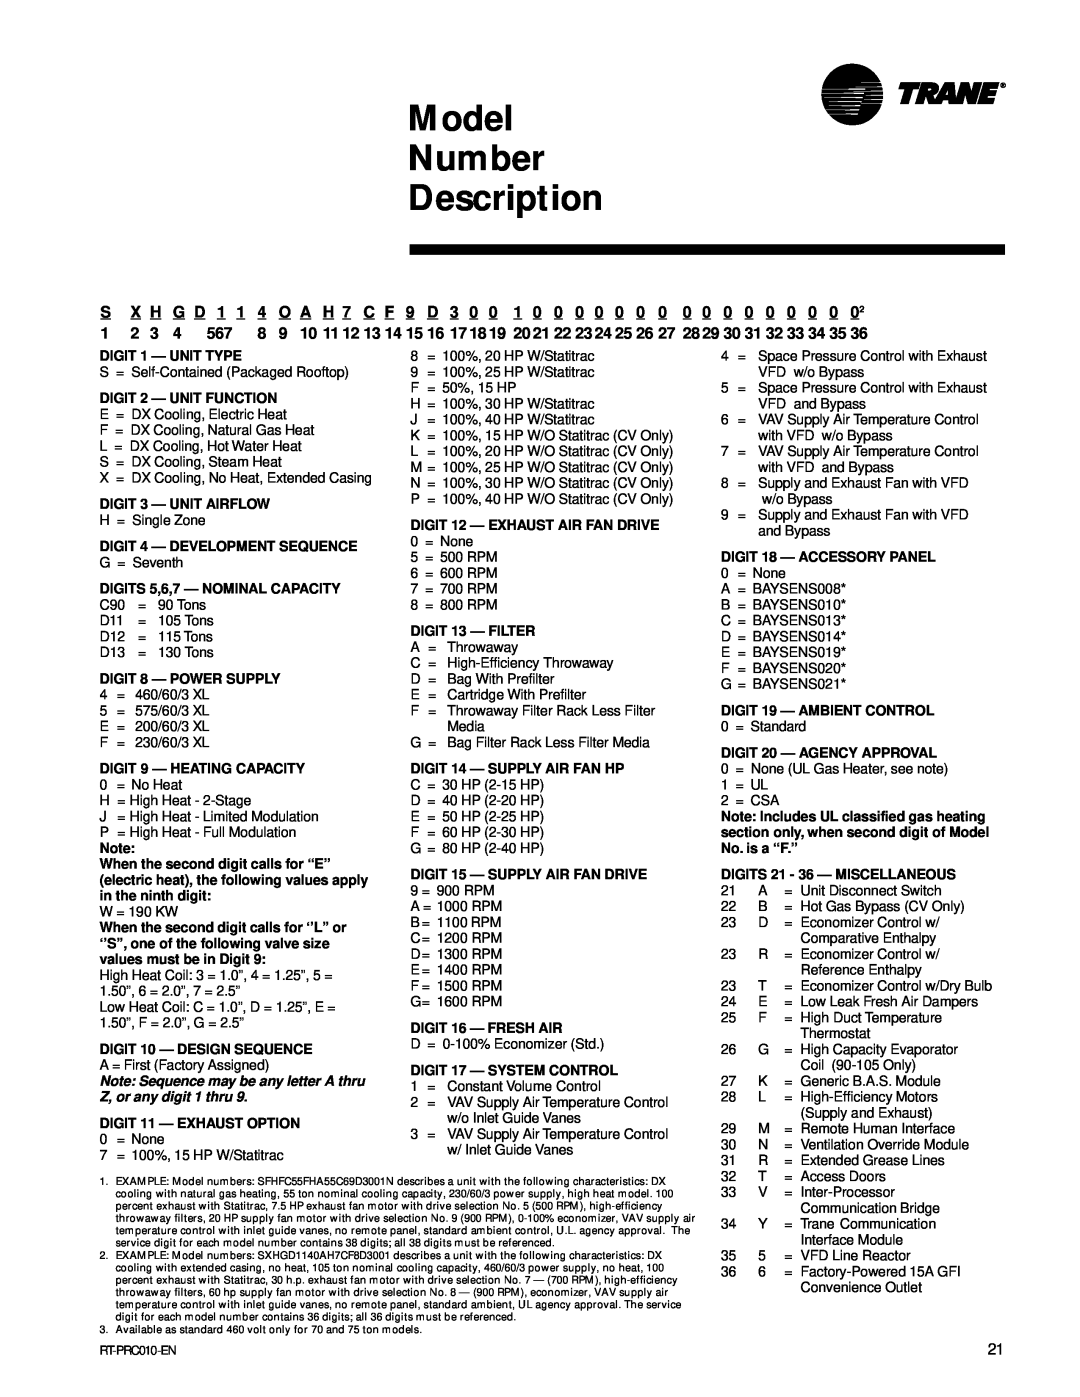 Trane RT-PRC010-EN manual Model Number Description, G D 1 1 